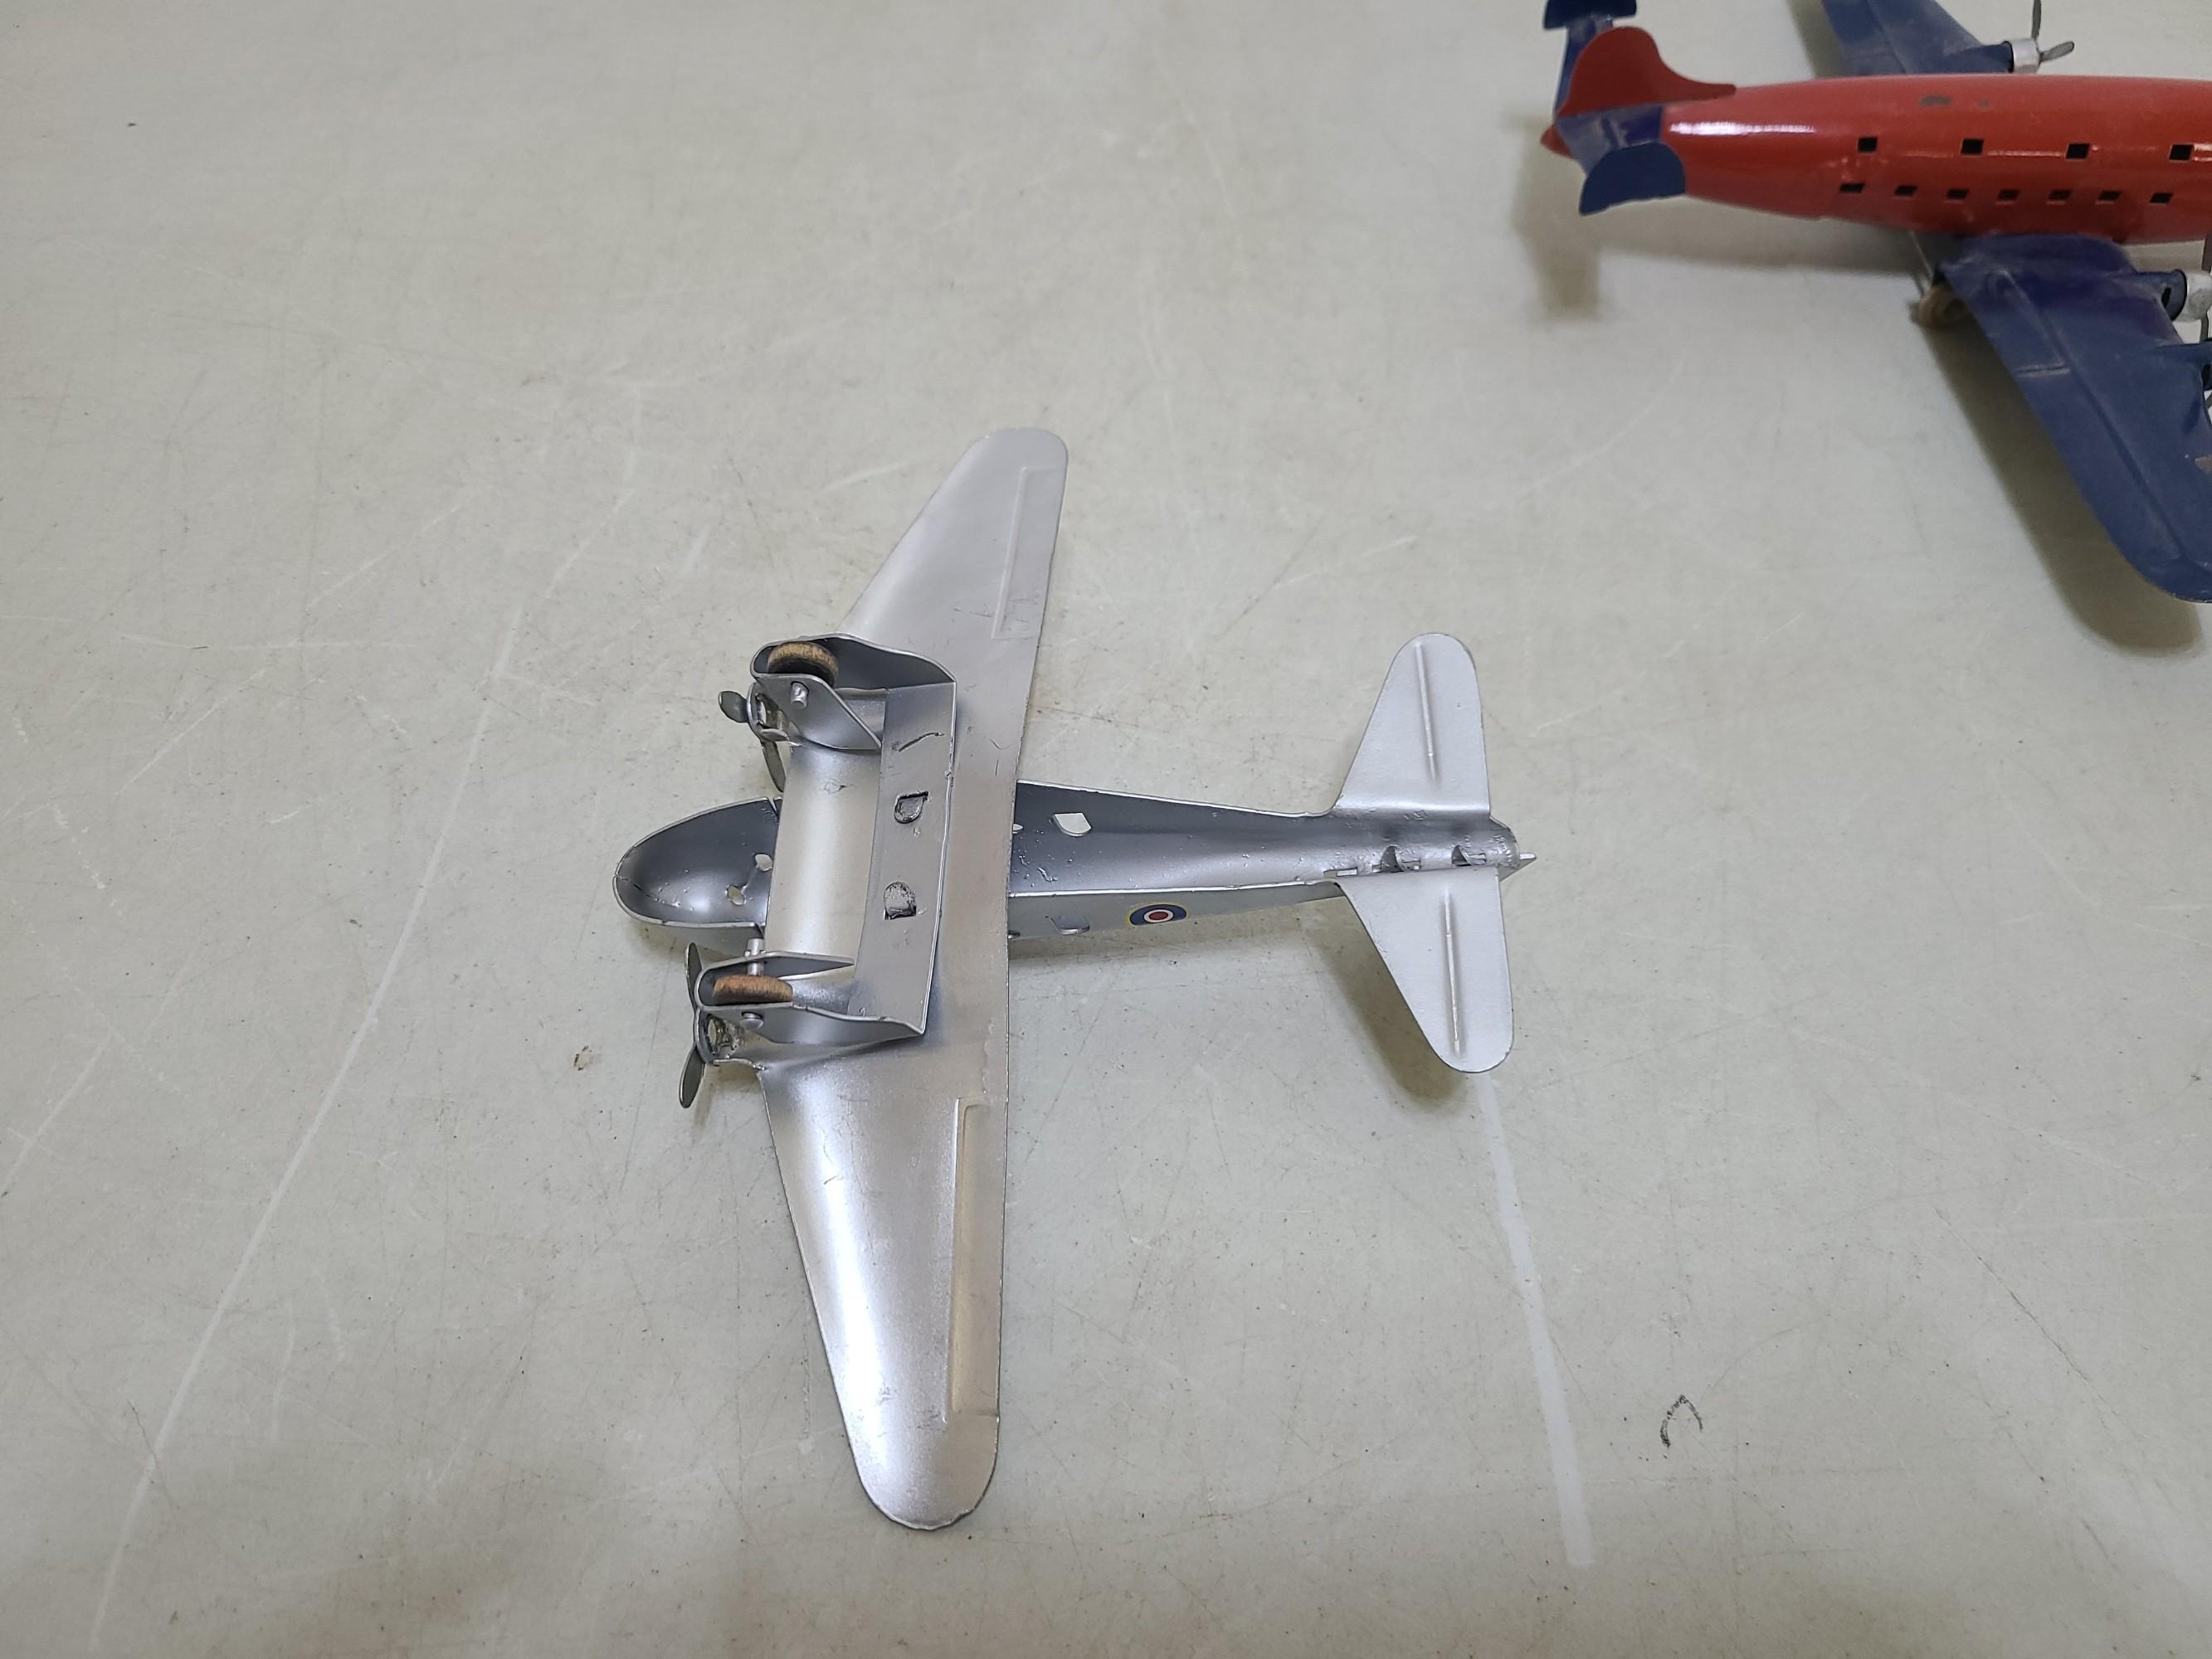 3 Tin Metal Toy Planes